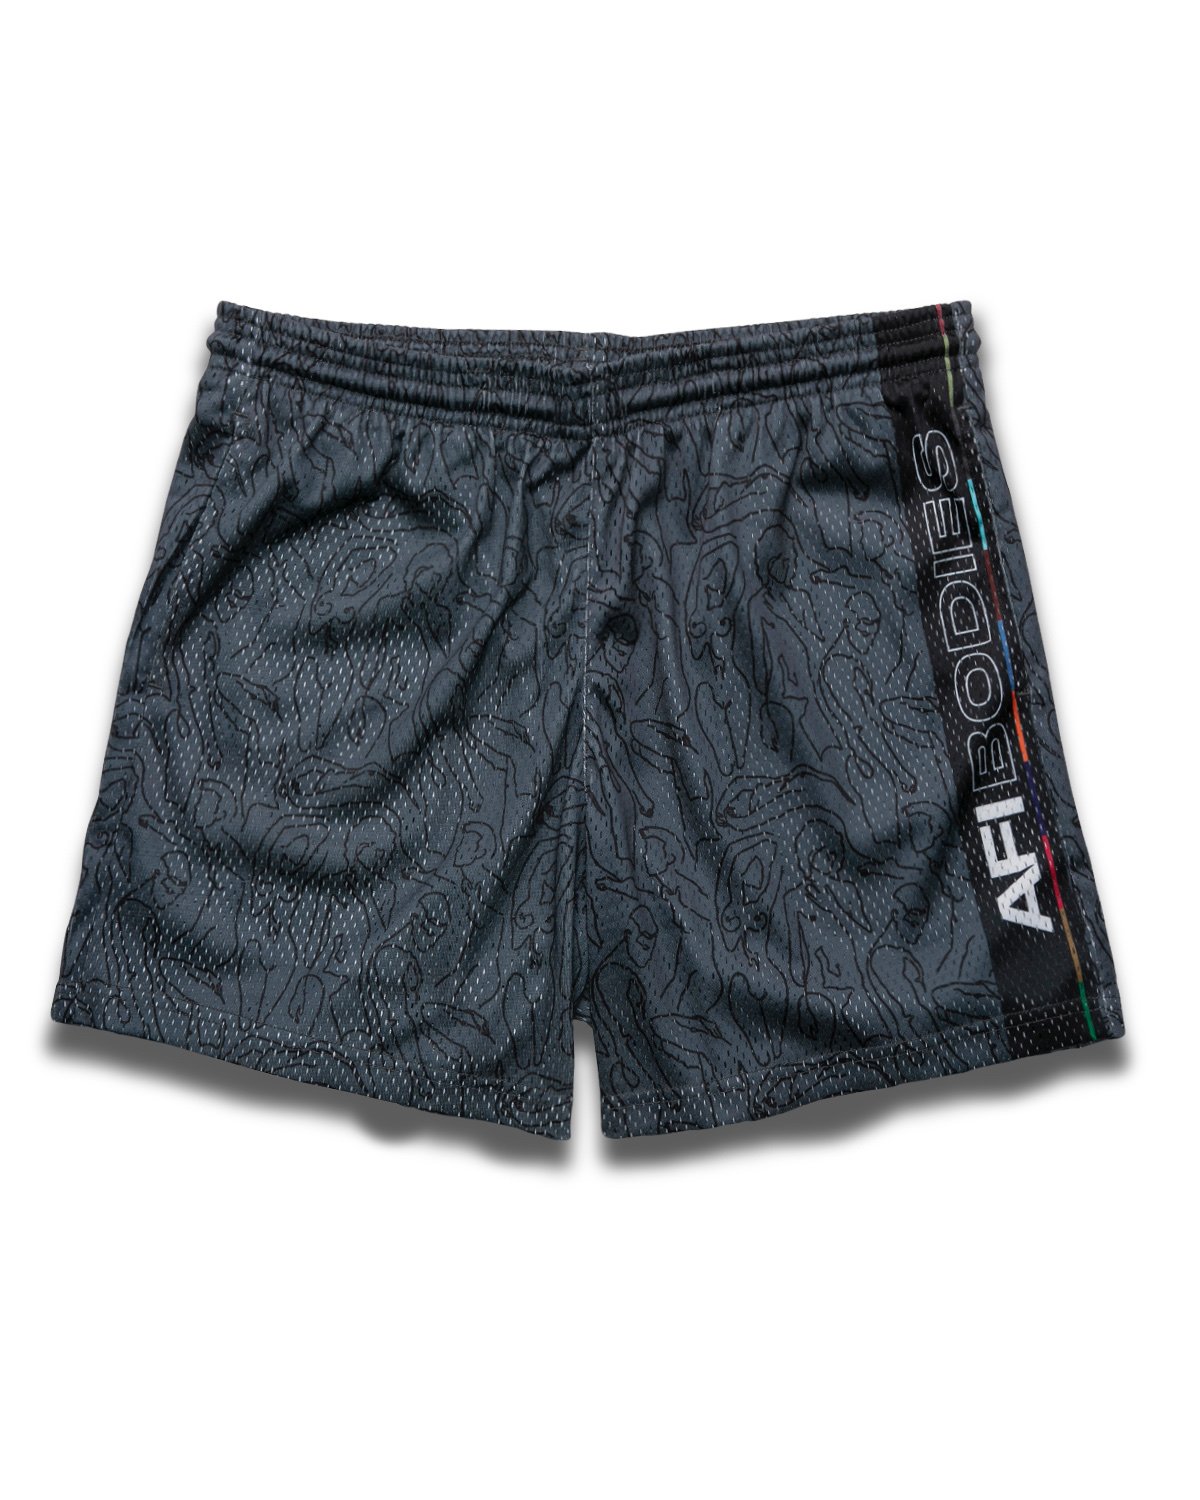 Mesh Shorts | Sublimated Design | 190g Weight Fabric | AFI